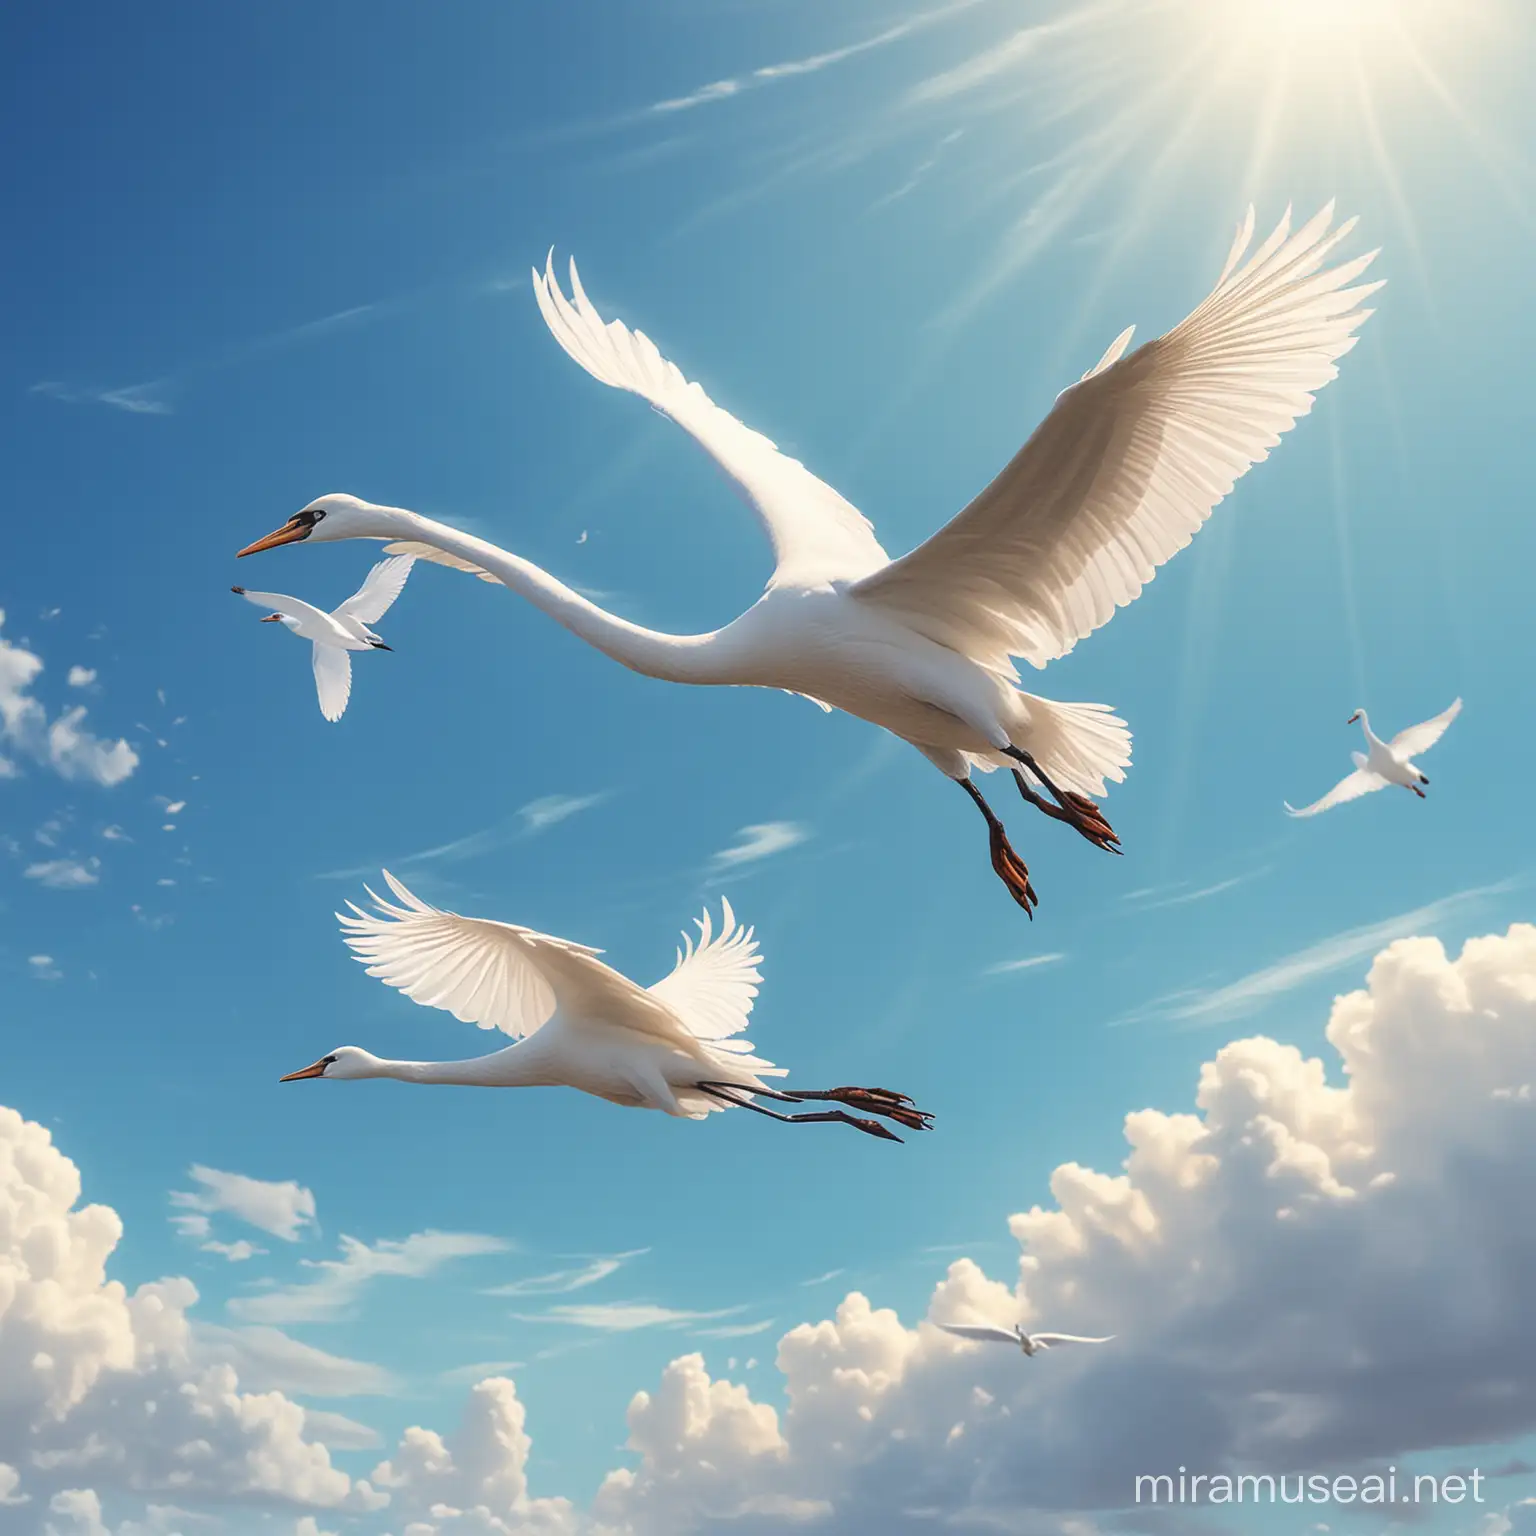 Graceful Egret and Swan Soar in Dreamy Disney Pixar Sky